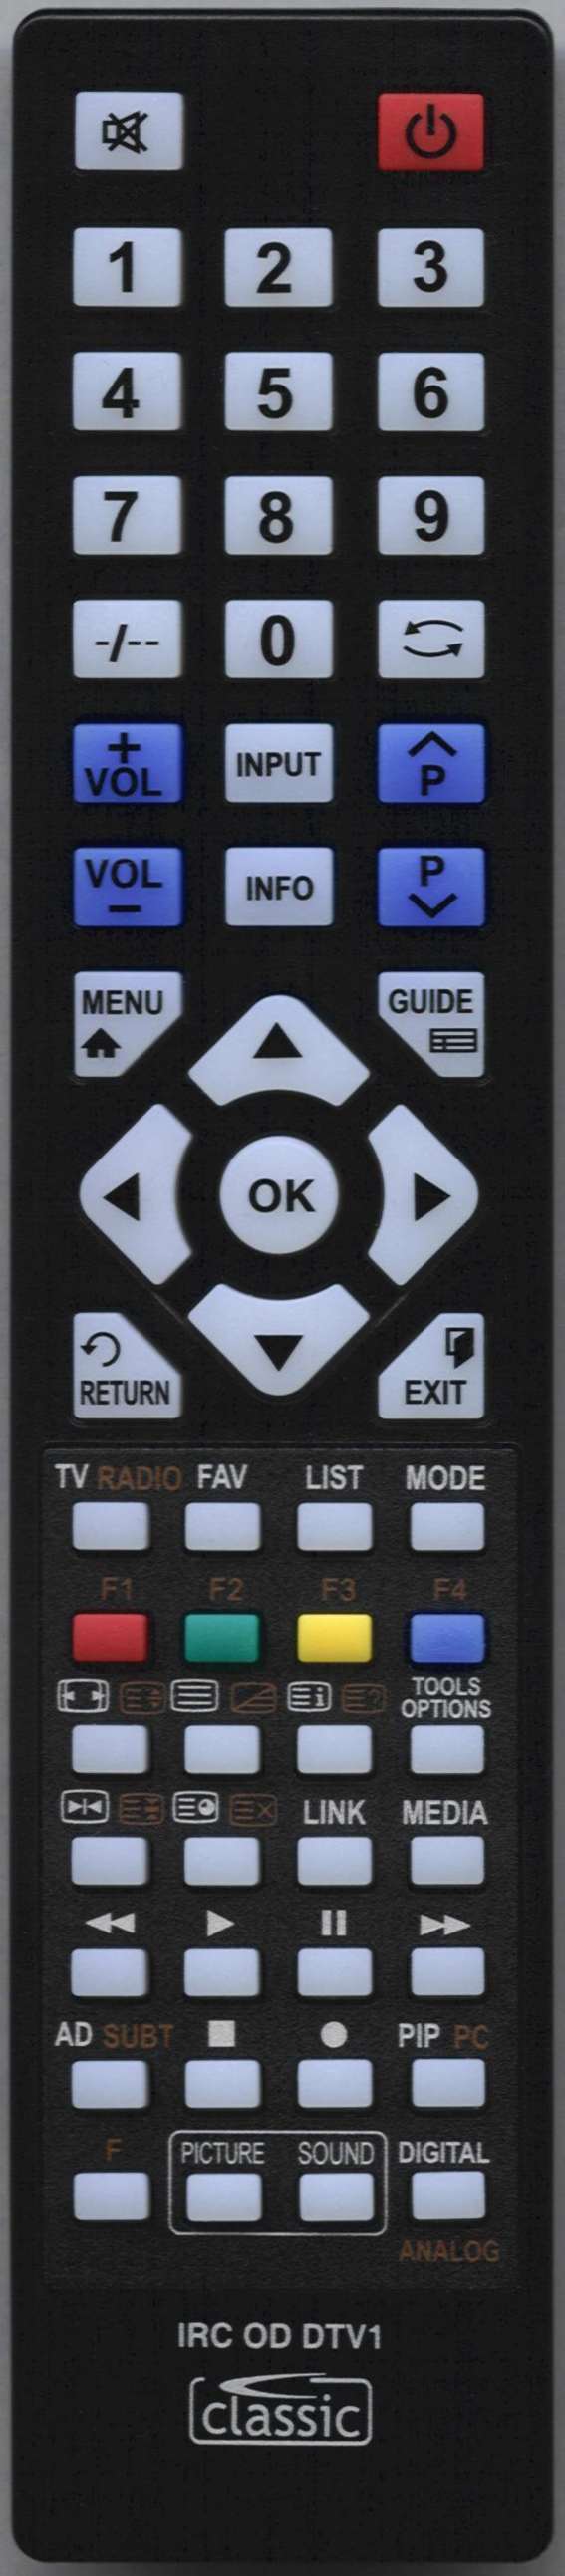 DIGITREX CFD-1571B remote control